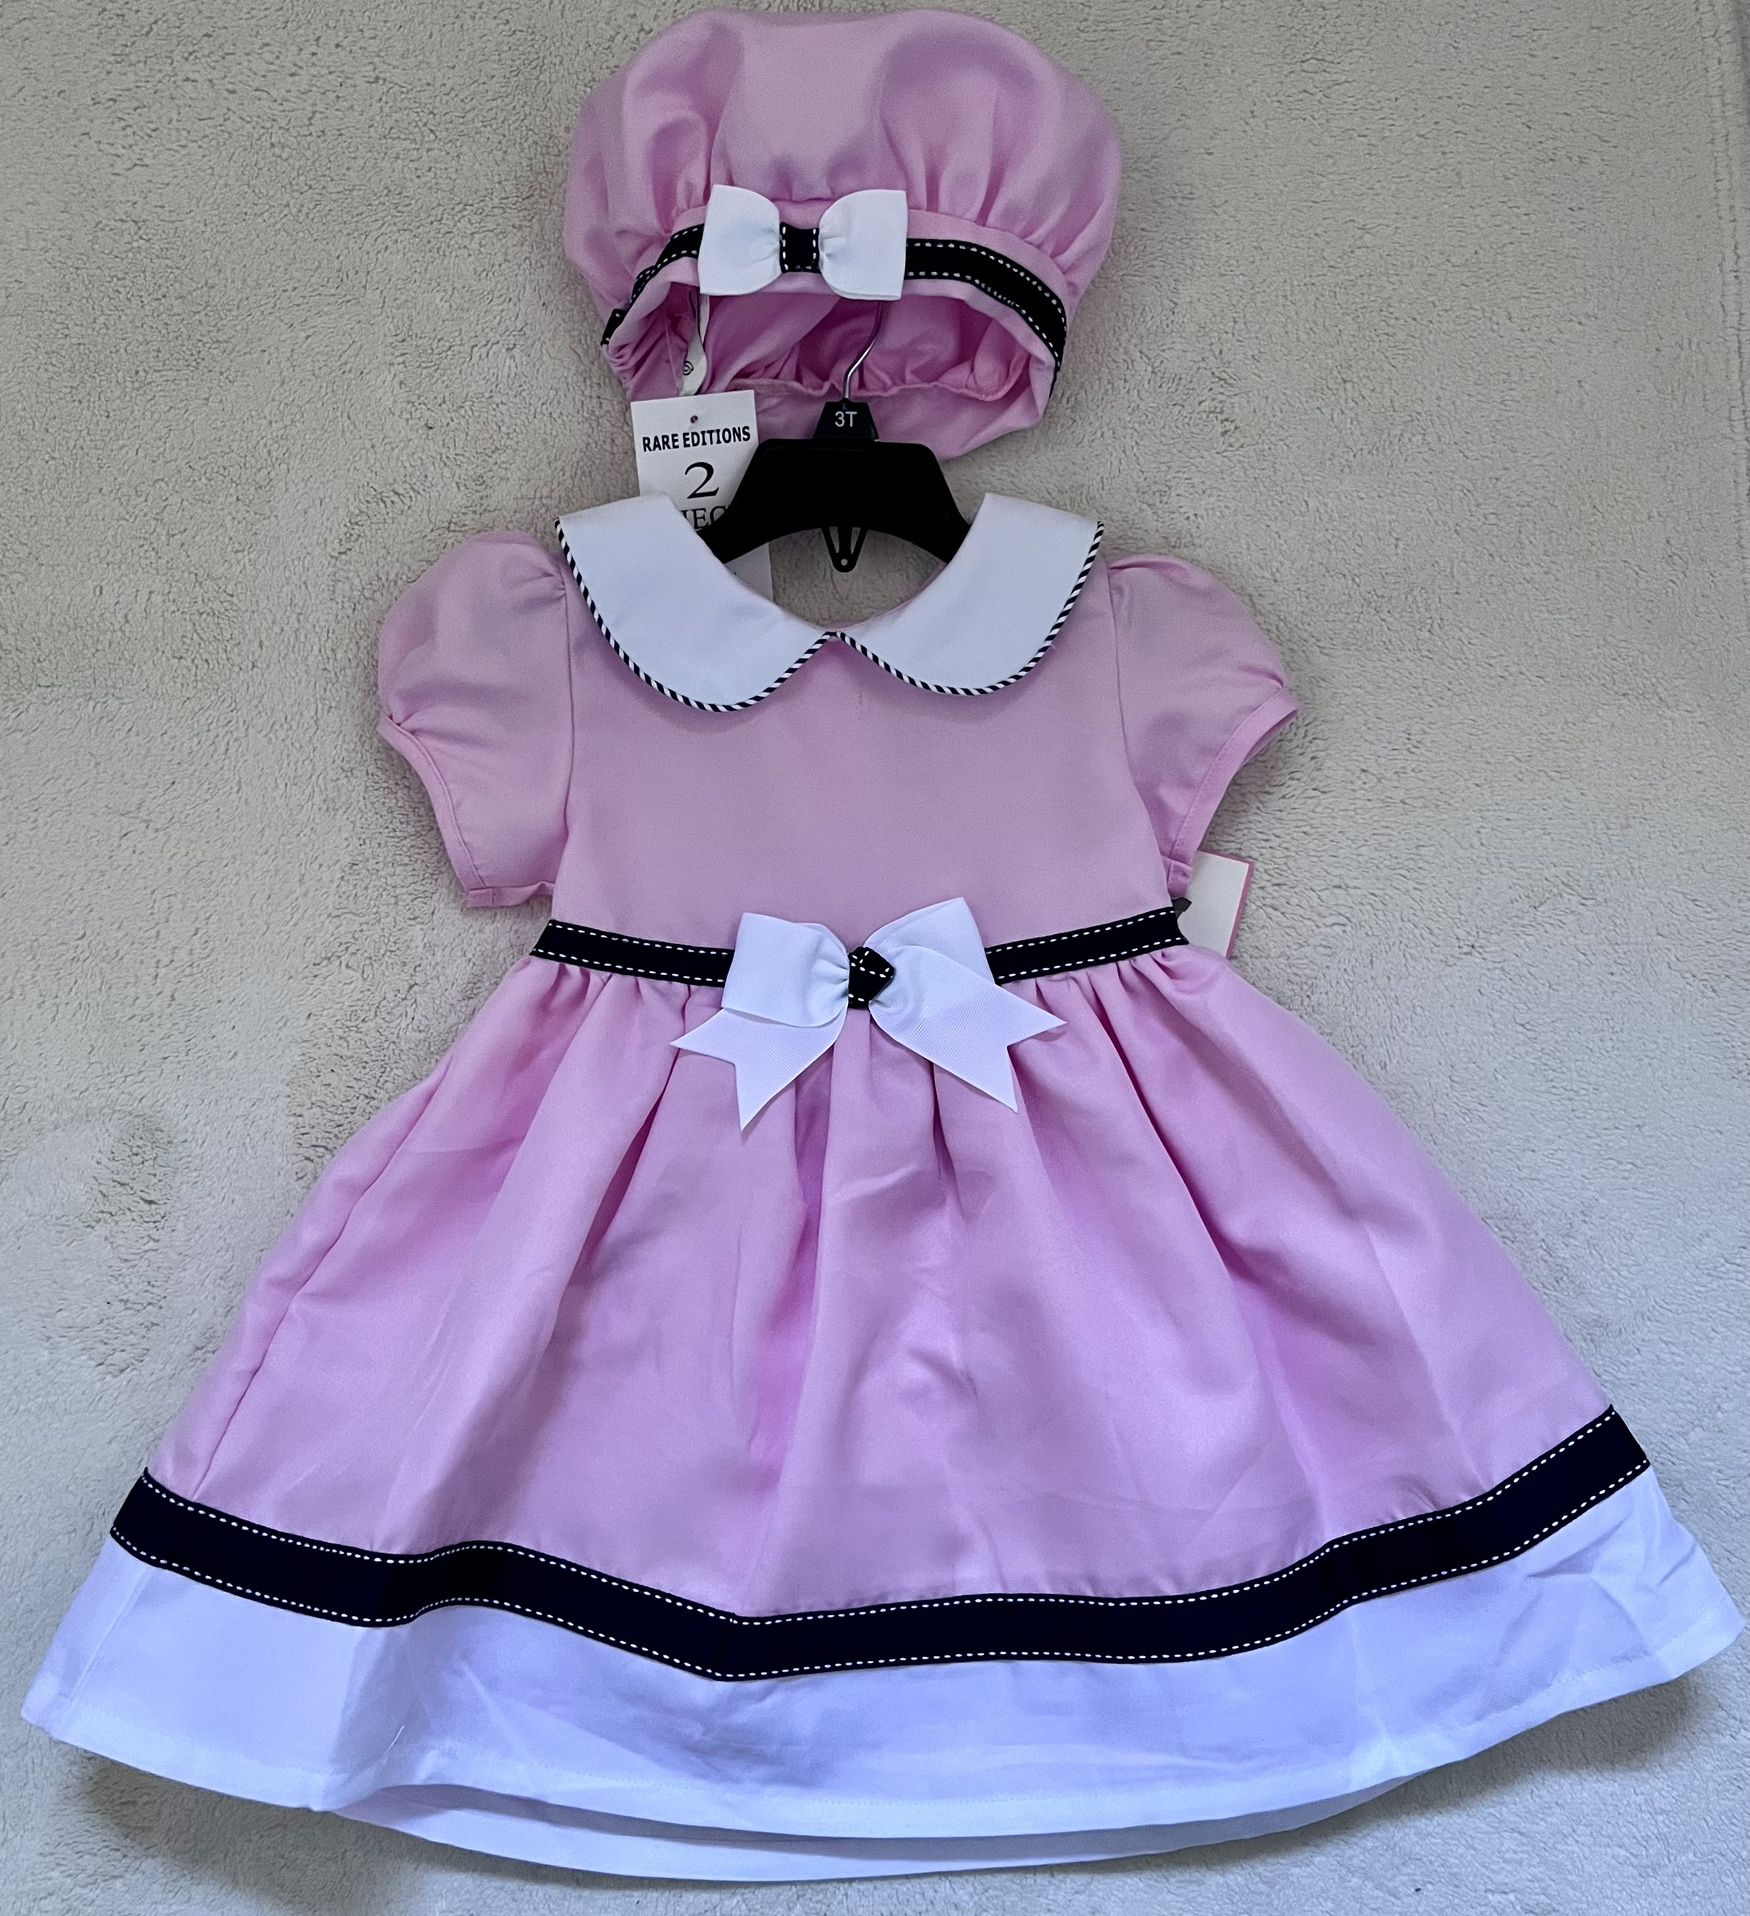 Pink/white/black Rare Editions Dress Bundle